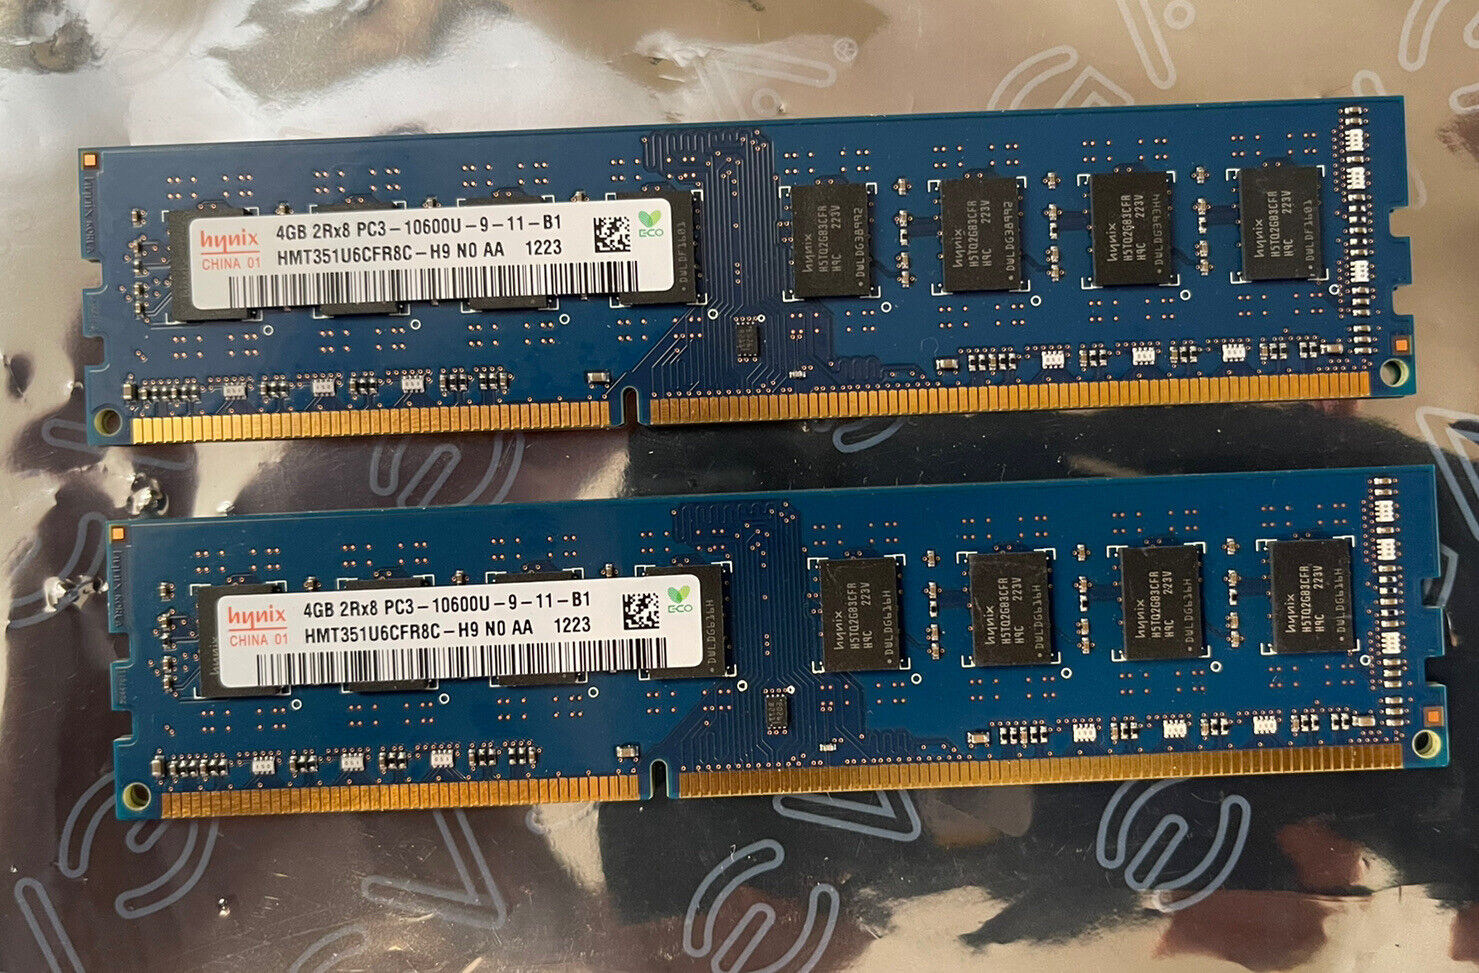 Hynix PC3-10600 (DDR3-1333) 4 GB DIMM 1333 MHz PC3-10600 DDR3 SDRAM Memory...